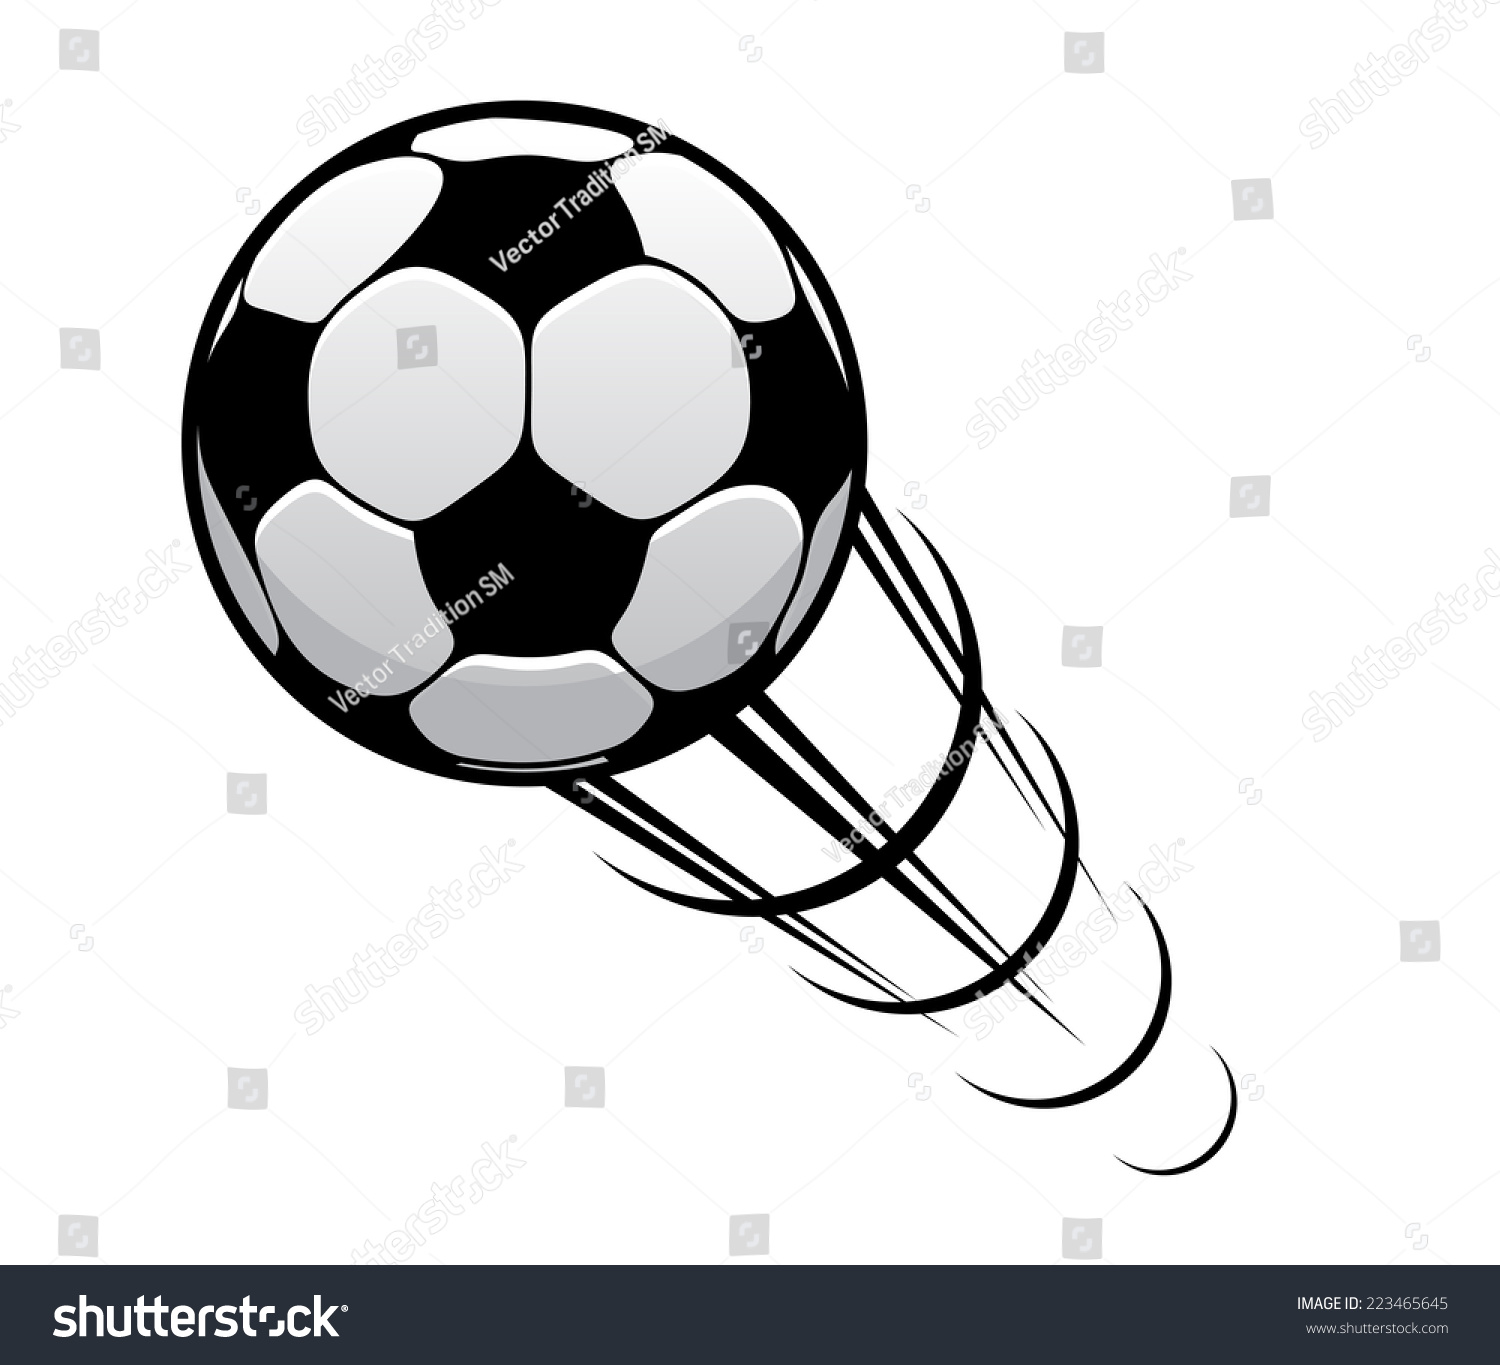 soccer ball that tracks speed